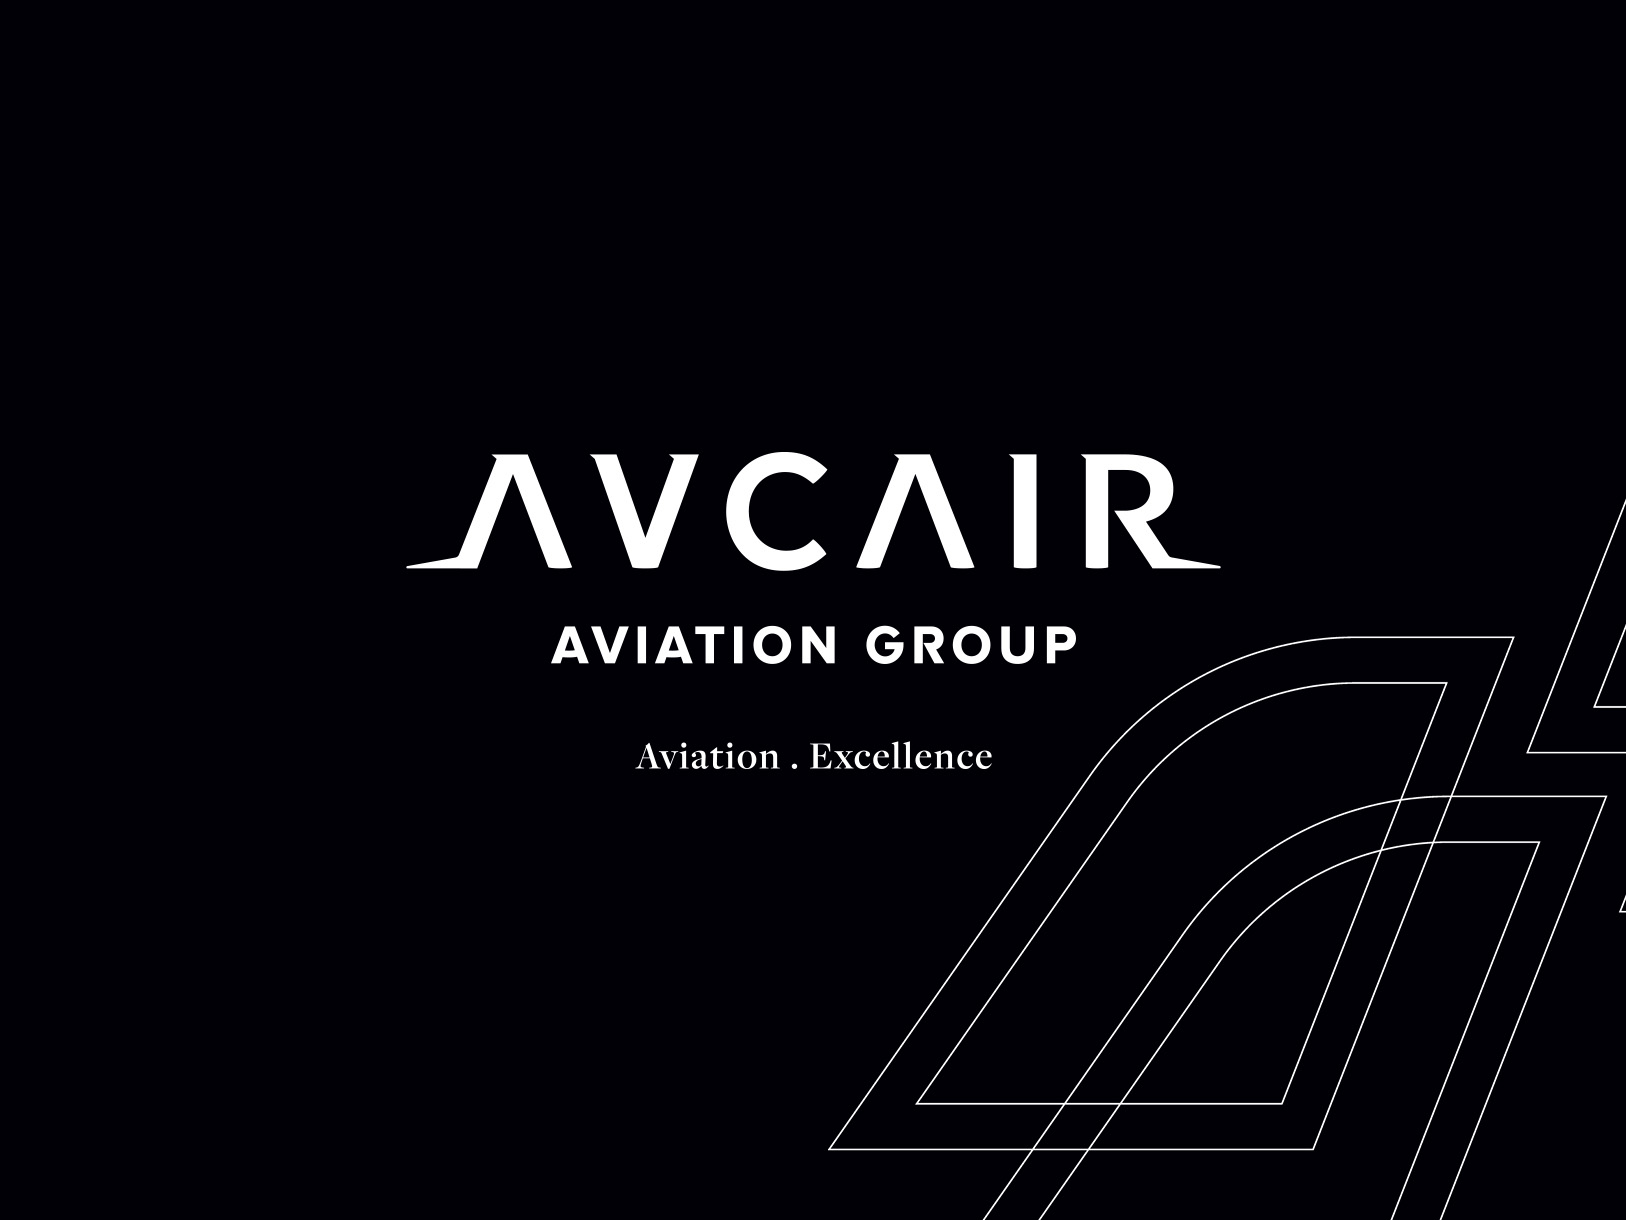 Avcair Aviation Group designed by brand strategy advisors DAIS